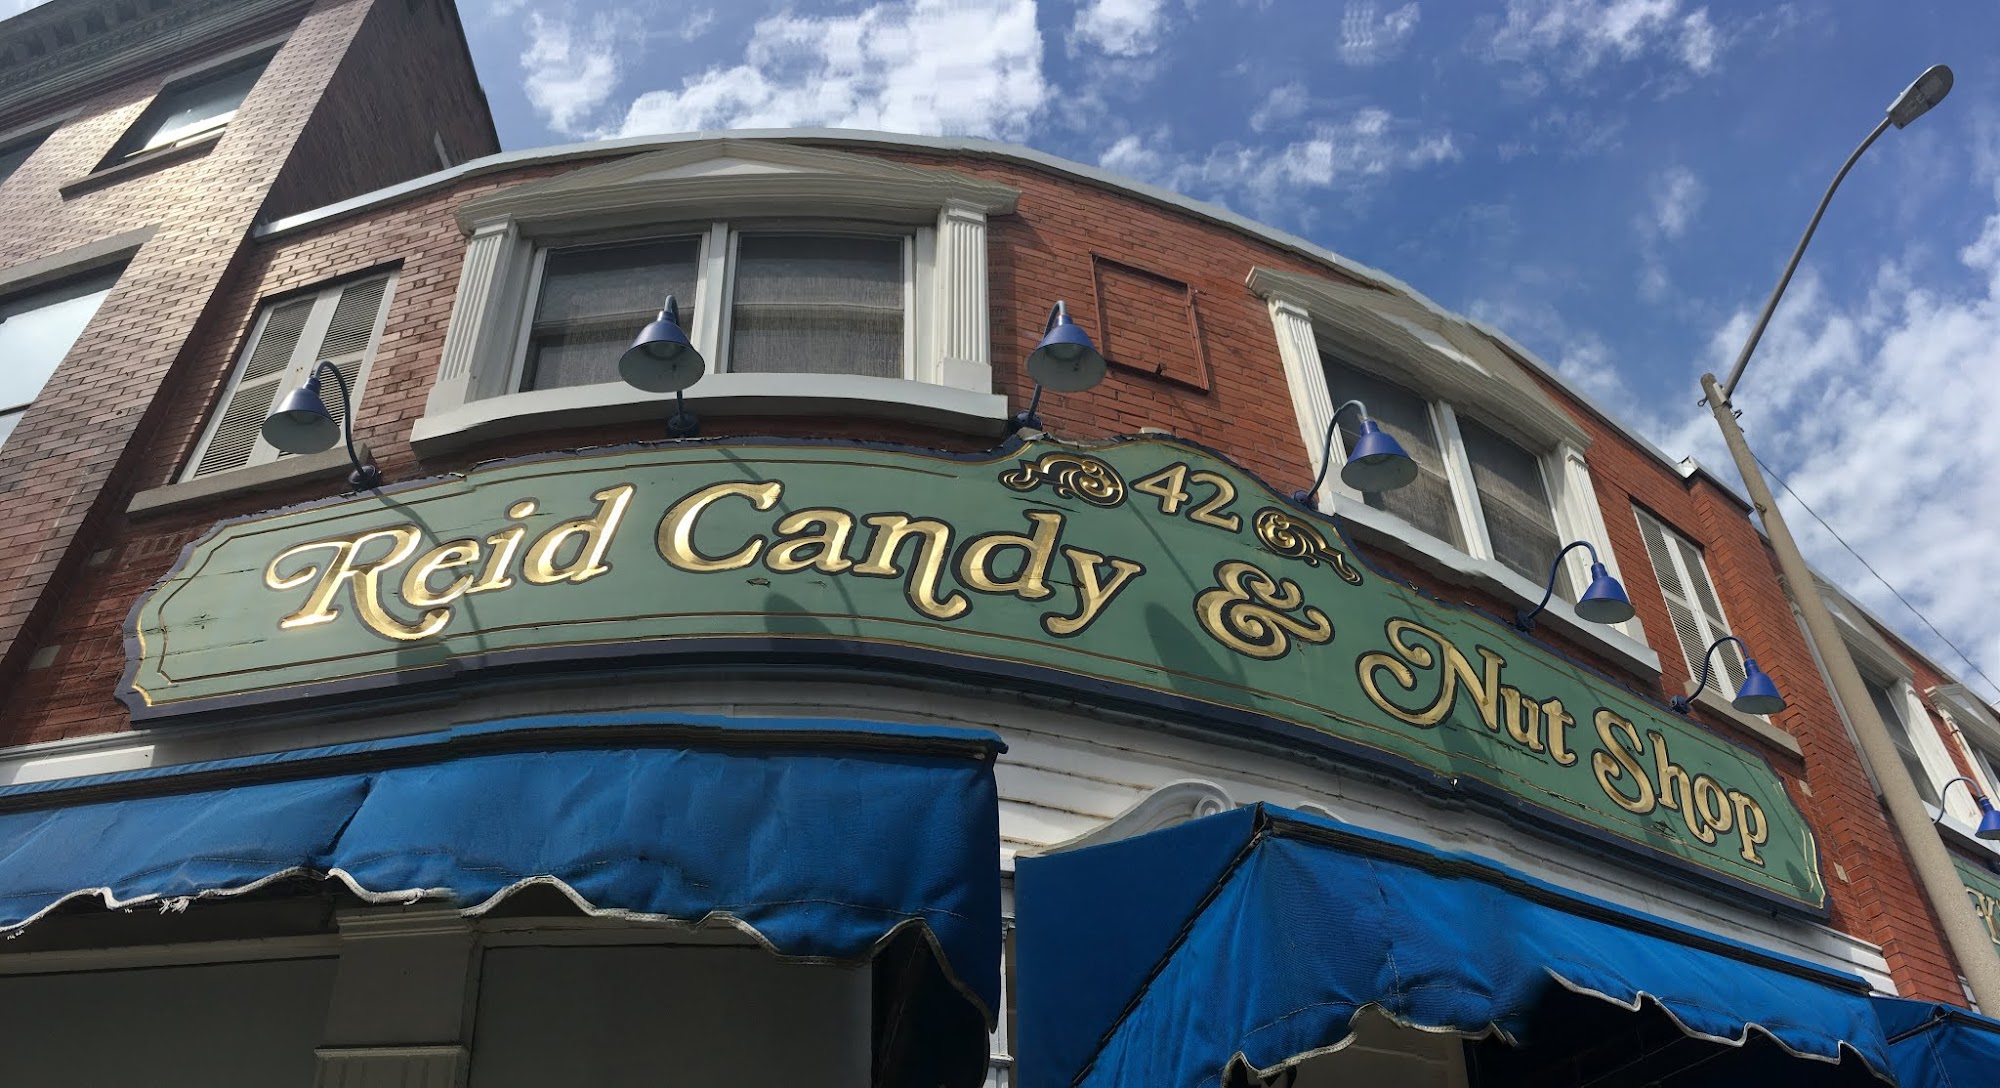 Reids Candy & Nut Shop